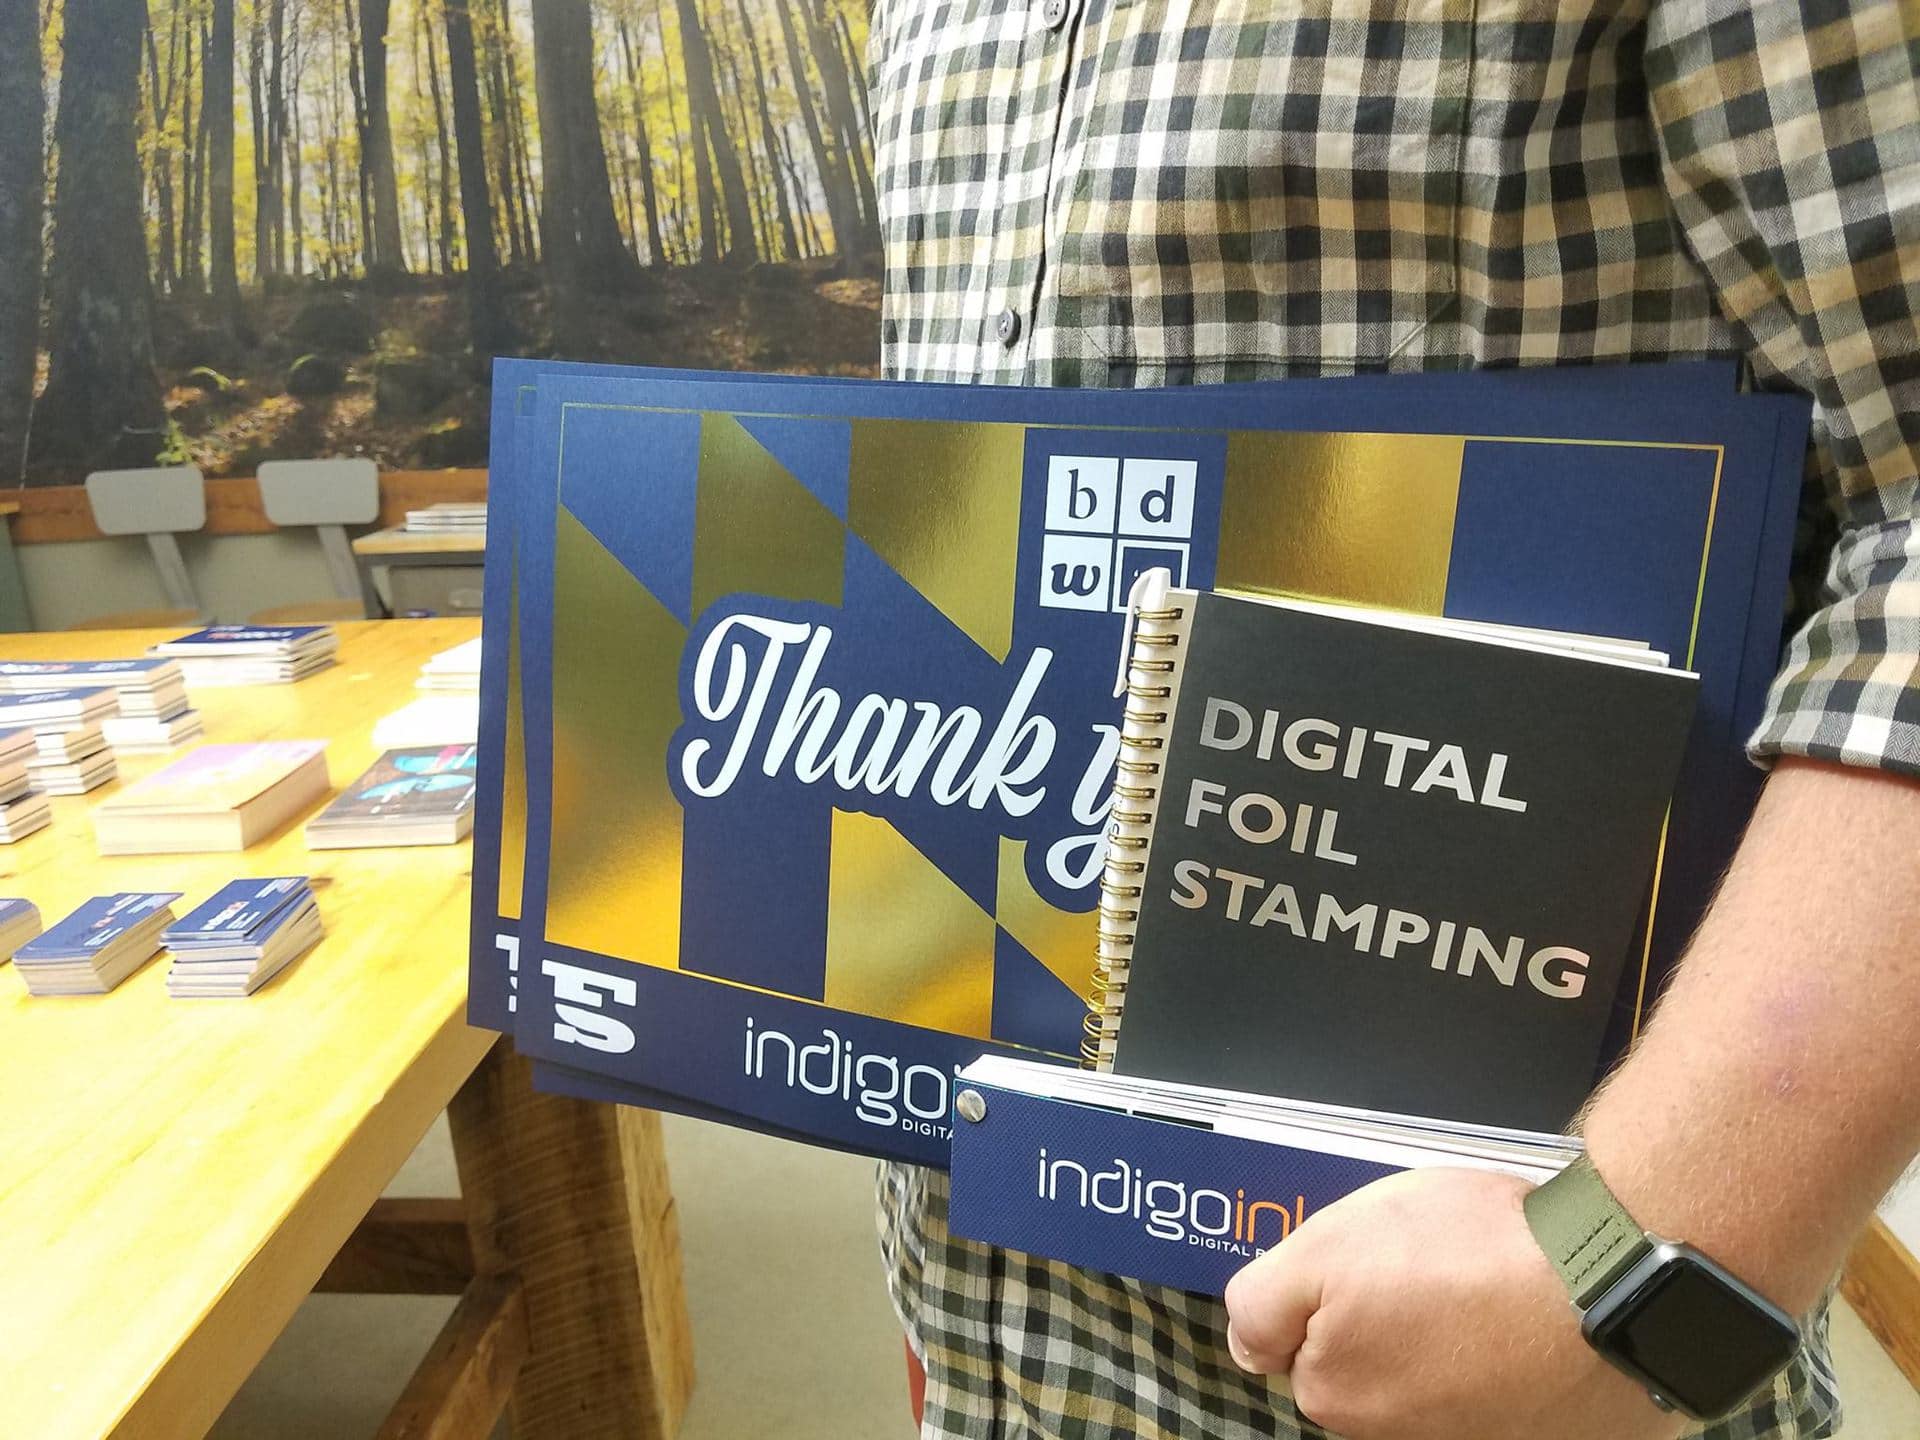 digital foil stamping 1